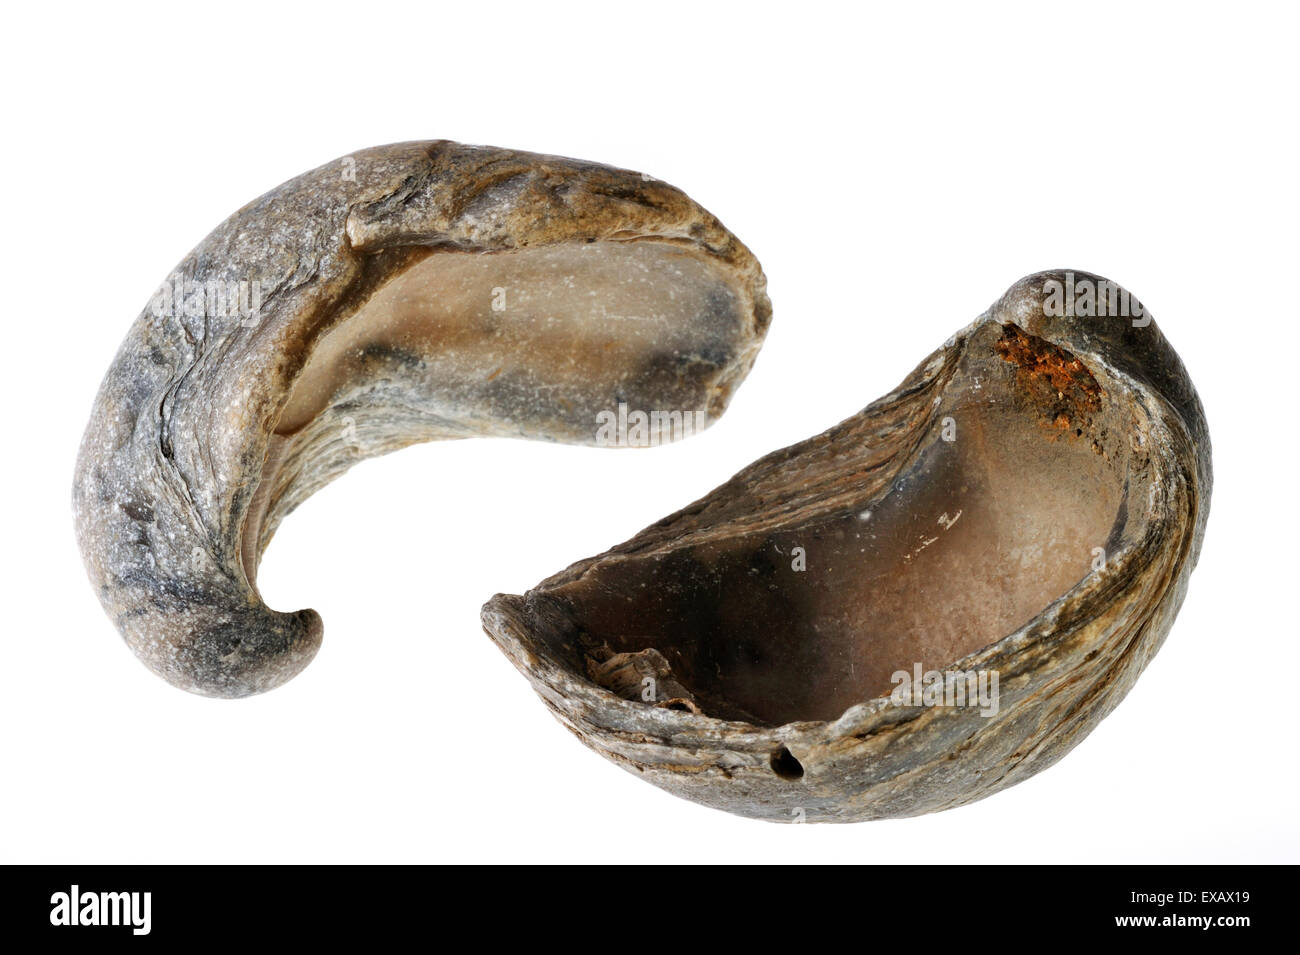 Devil's toenail / Gryphaea dilatata / Gryphea dilatata, species of Jurassic oyster, Gryphaeidae marine bivalve mollusc Stock Photo